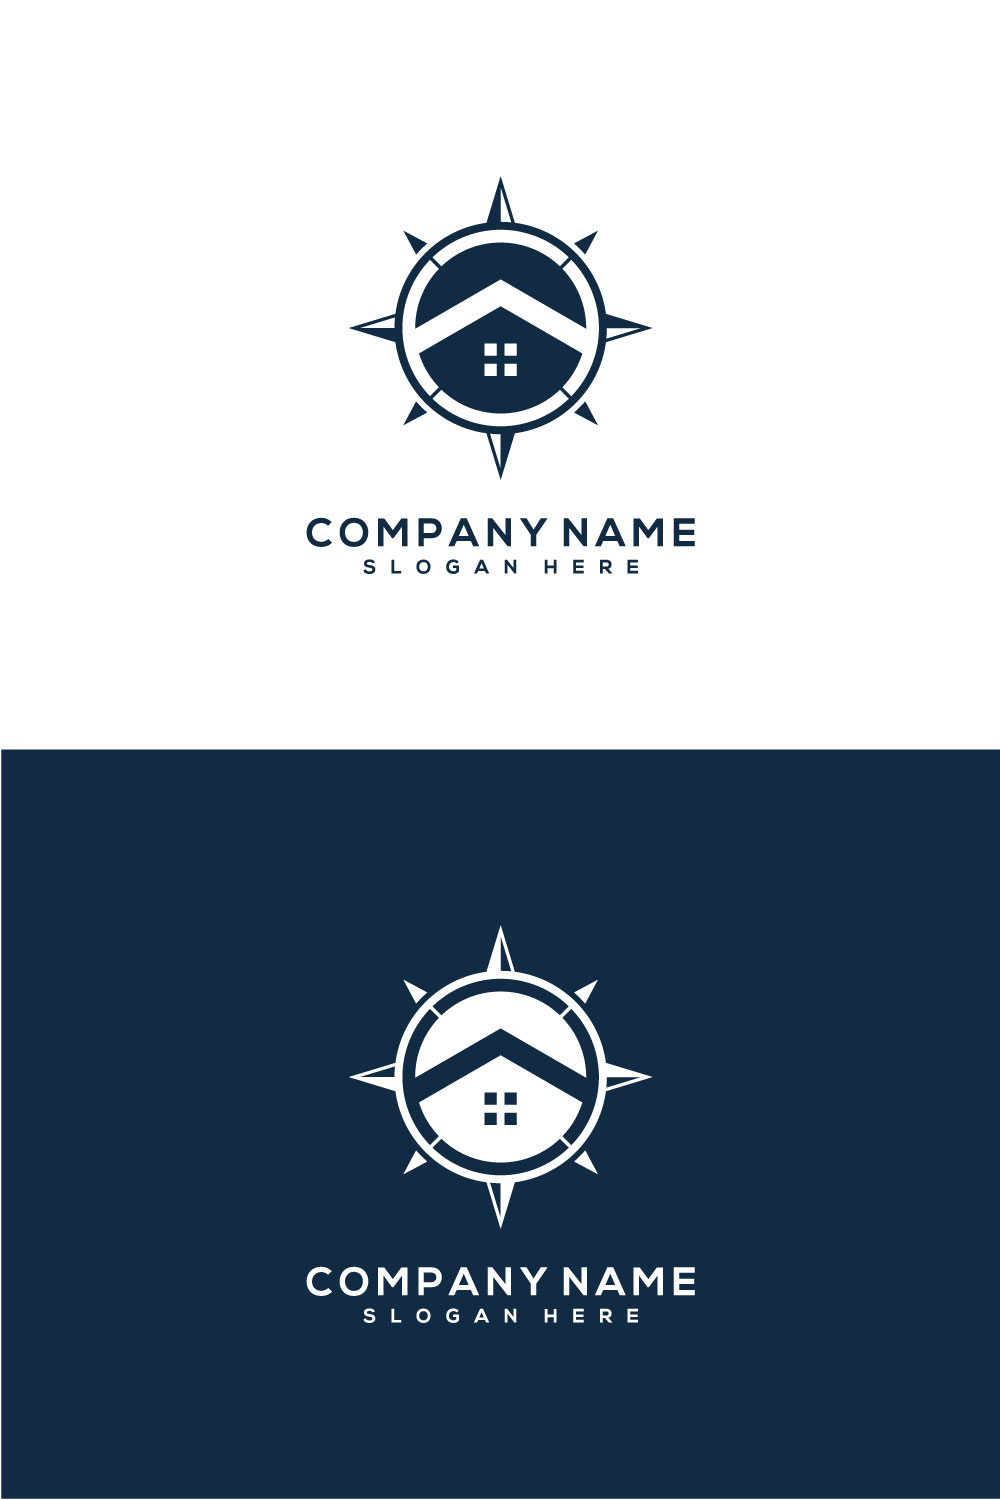 Compass and Home Logo Vector Design